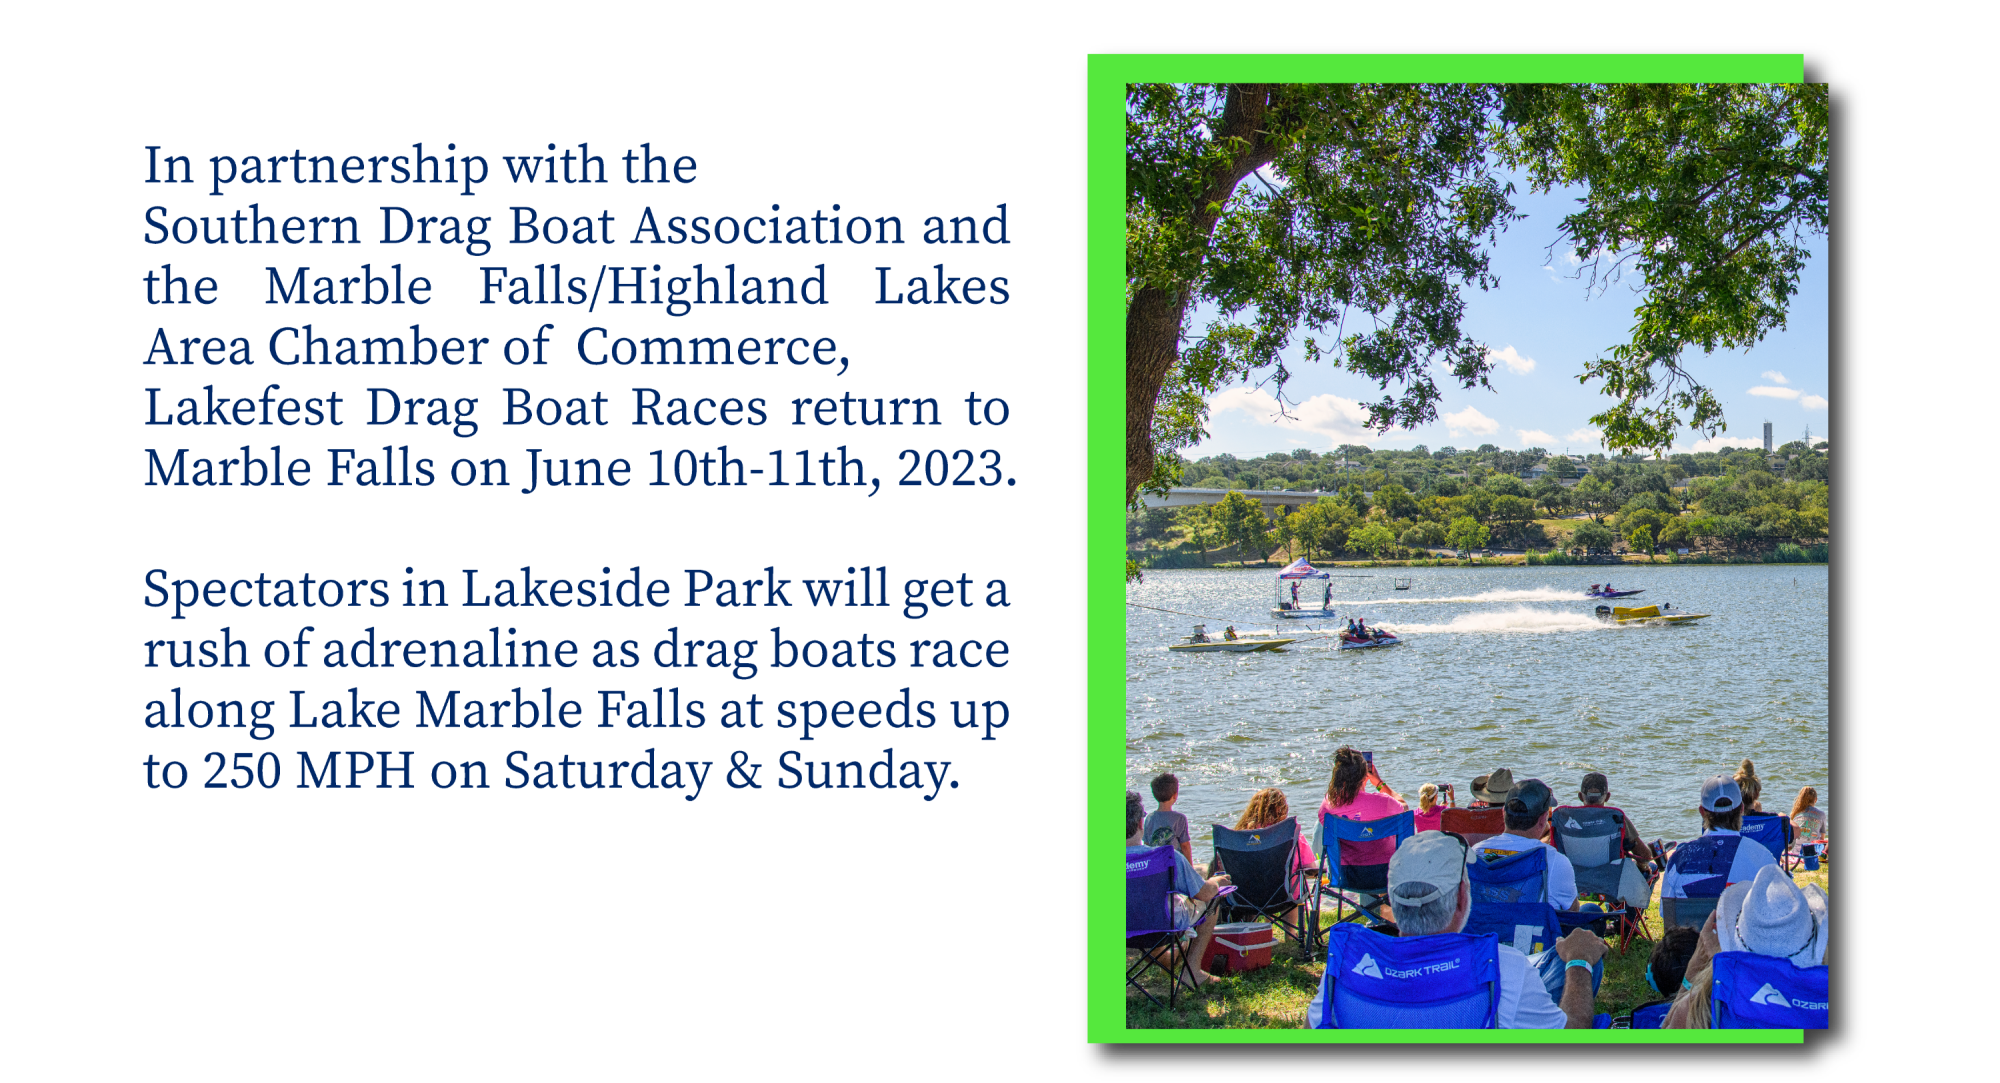 Lakefest Drag Boat Races 2023 Marble Falls / Highland Lakes Area